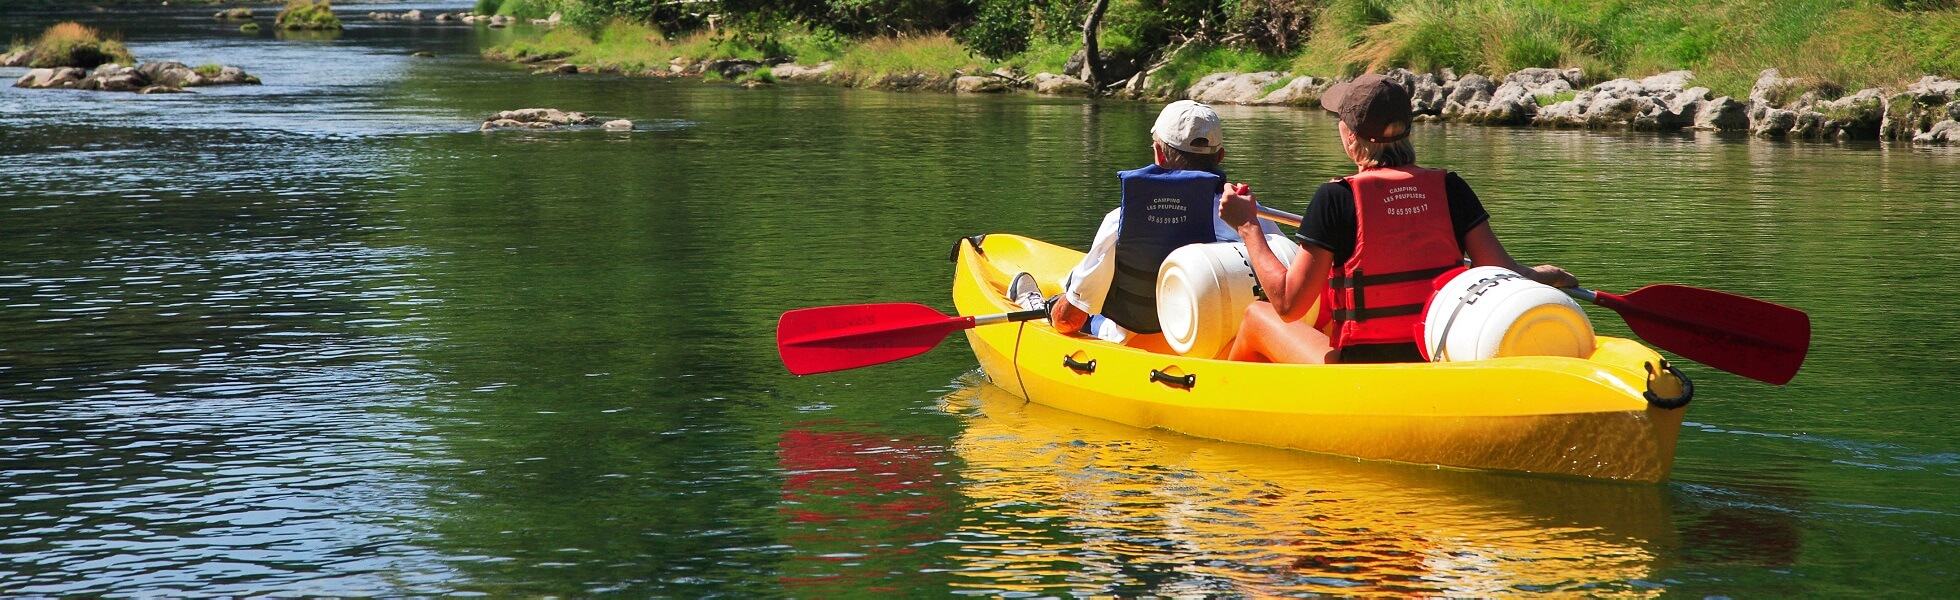 Discesa in canoa kayak